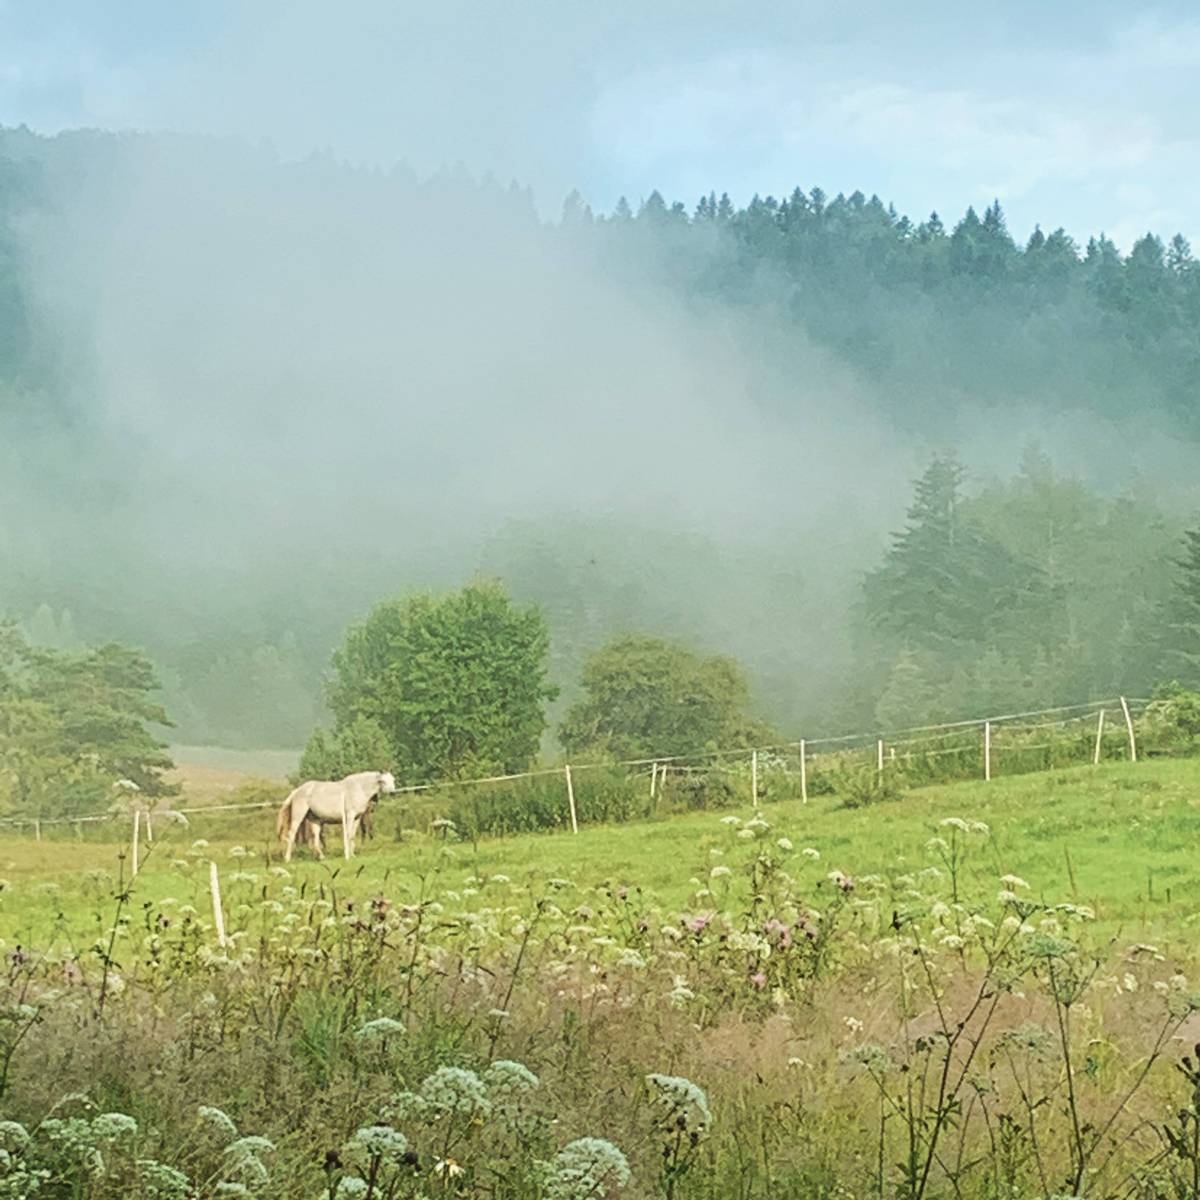 A horse in morning mist, Beskid Niski mts, Poland